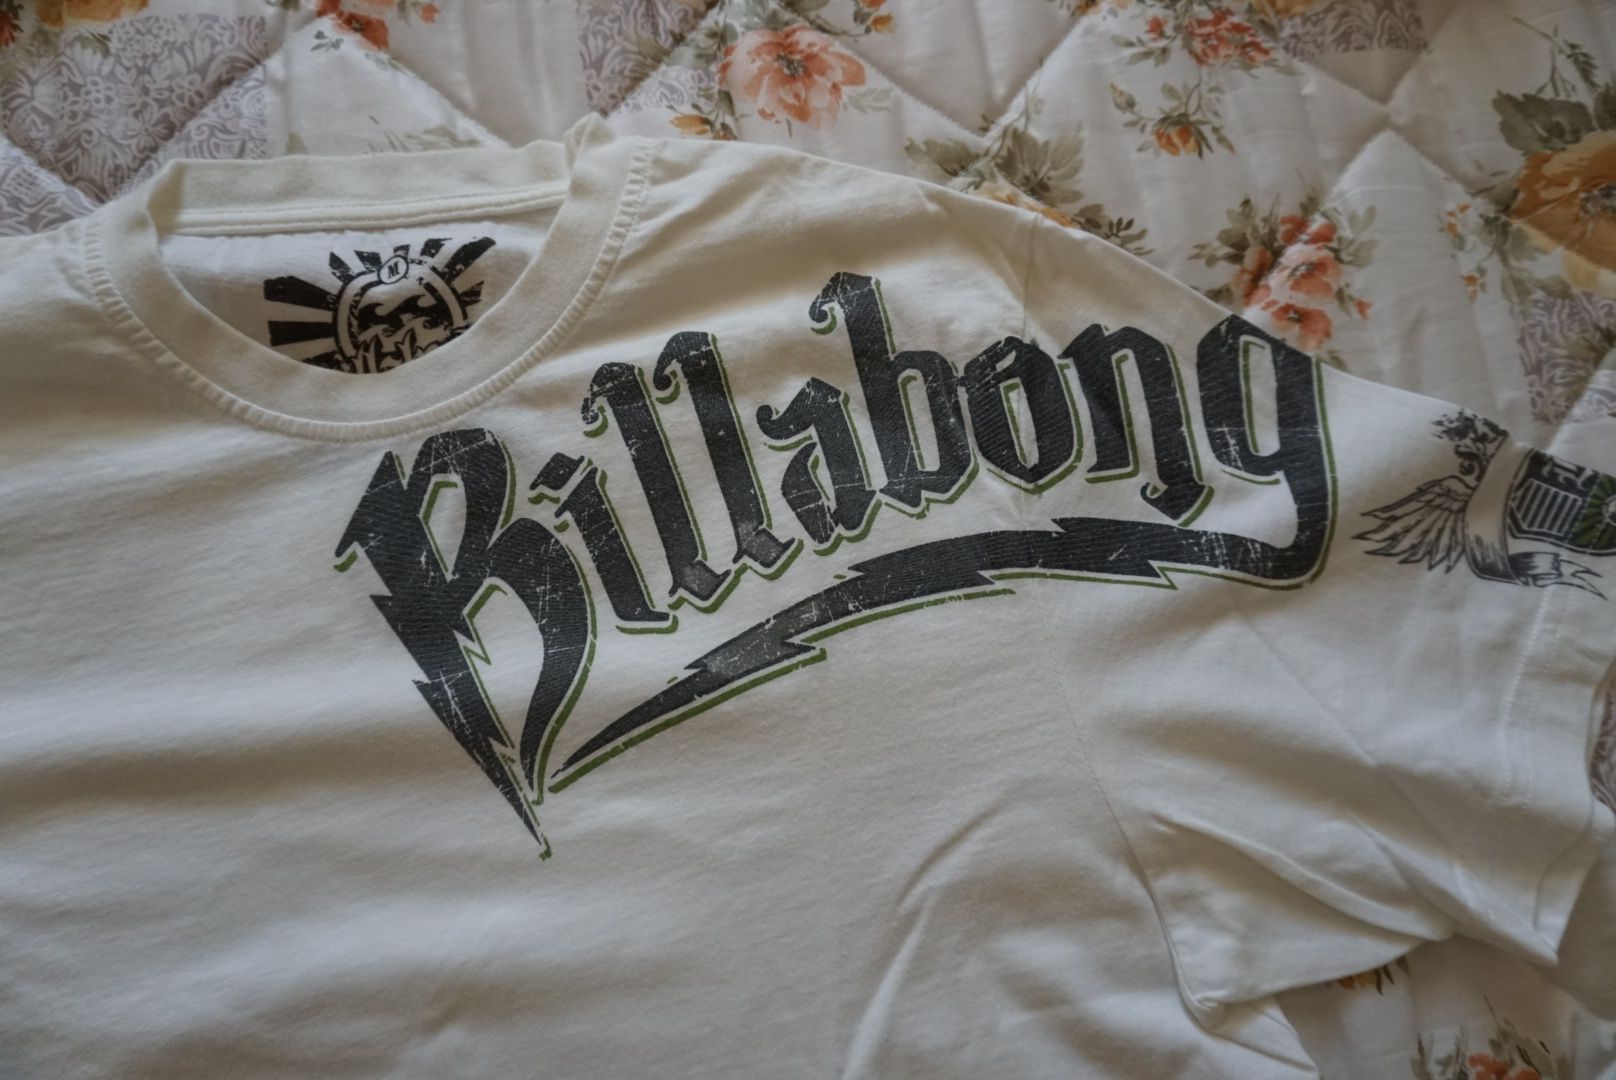 T-shirt Billabong. Portes incluídos.